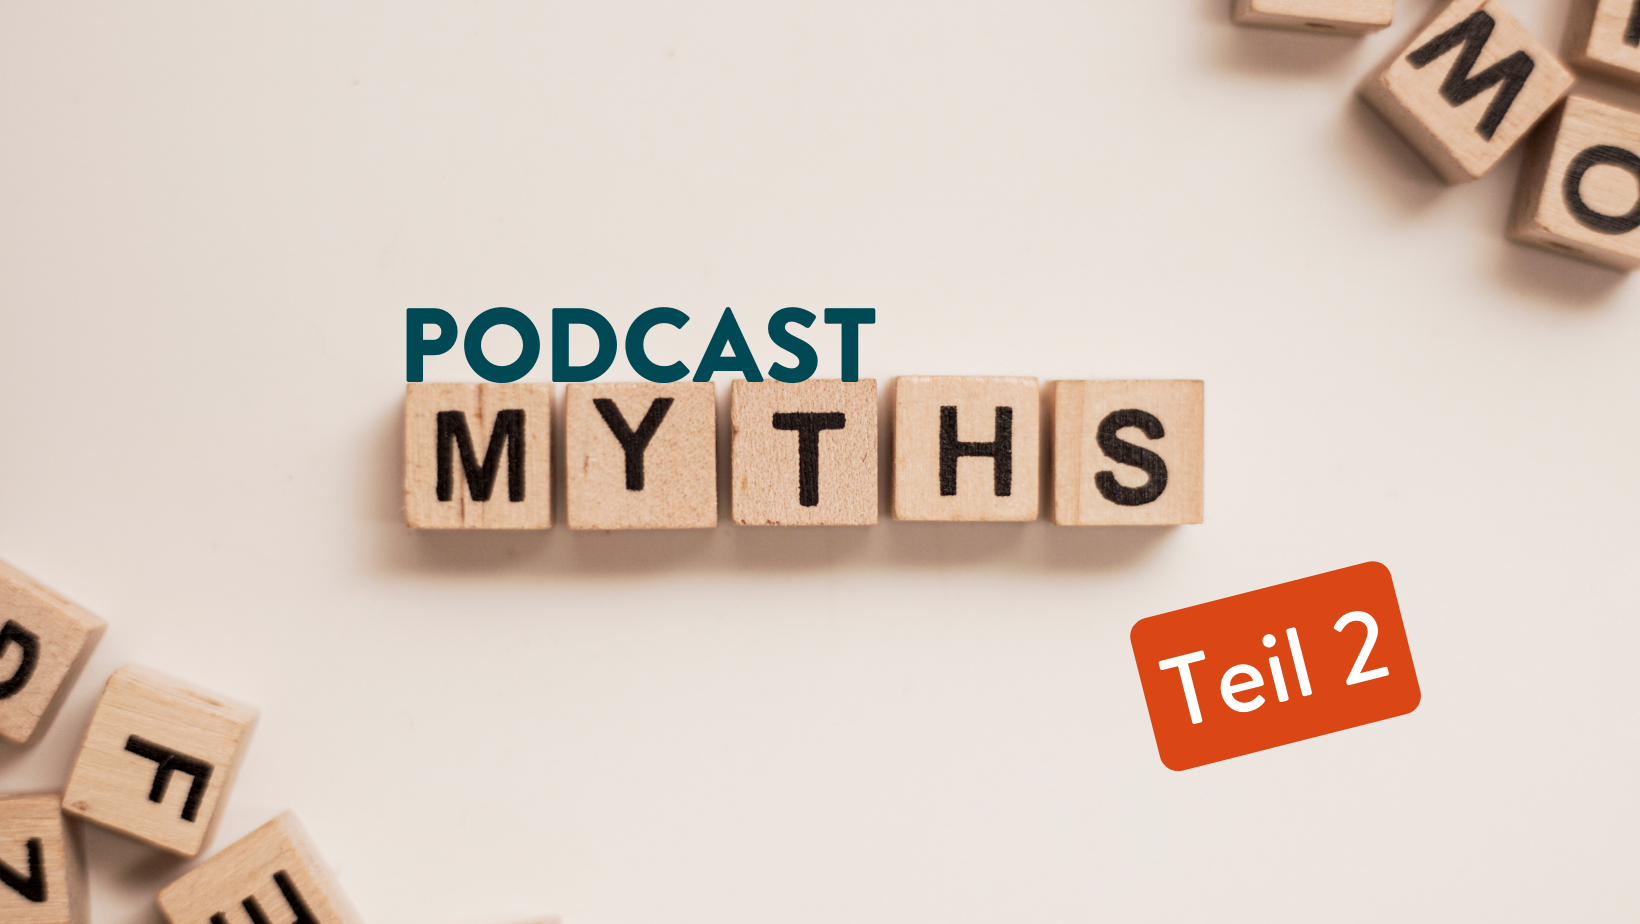 podcast mythes